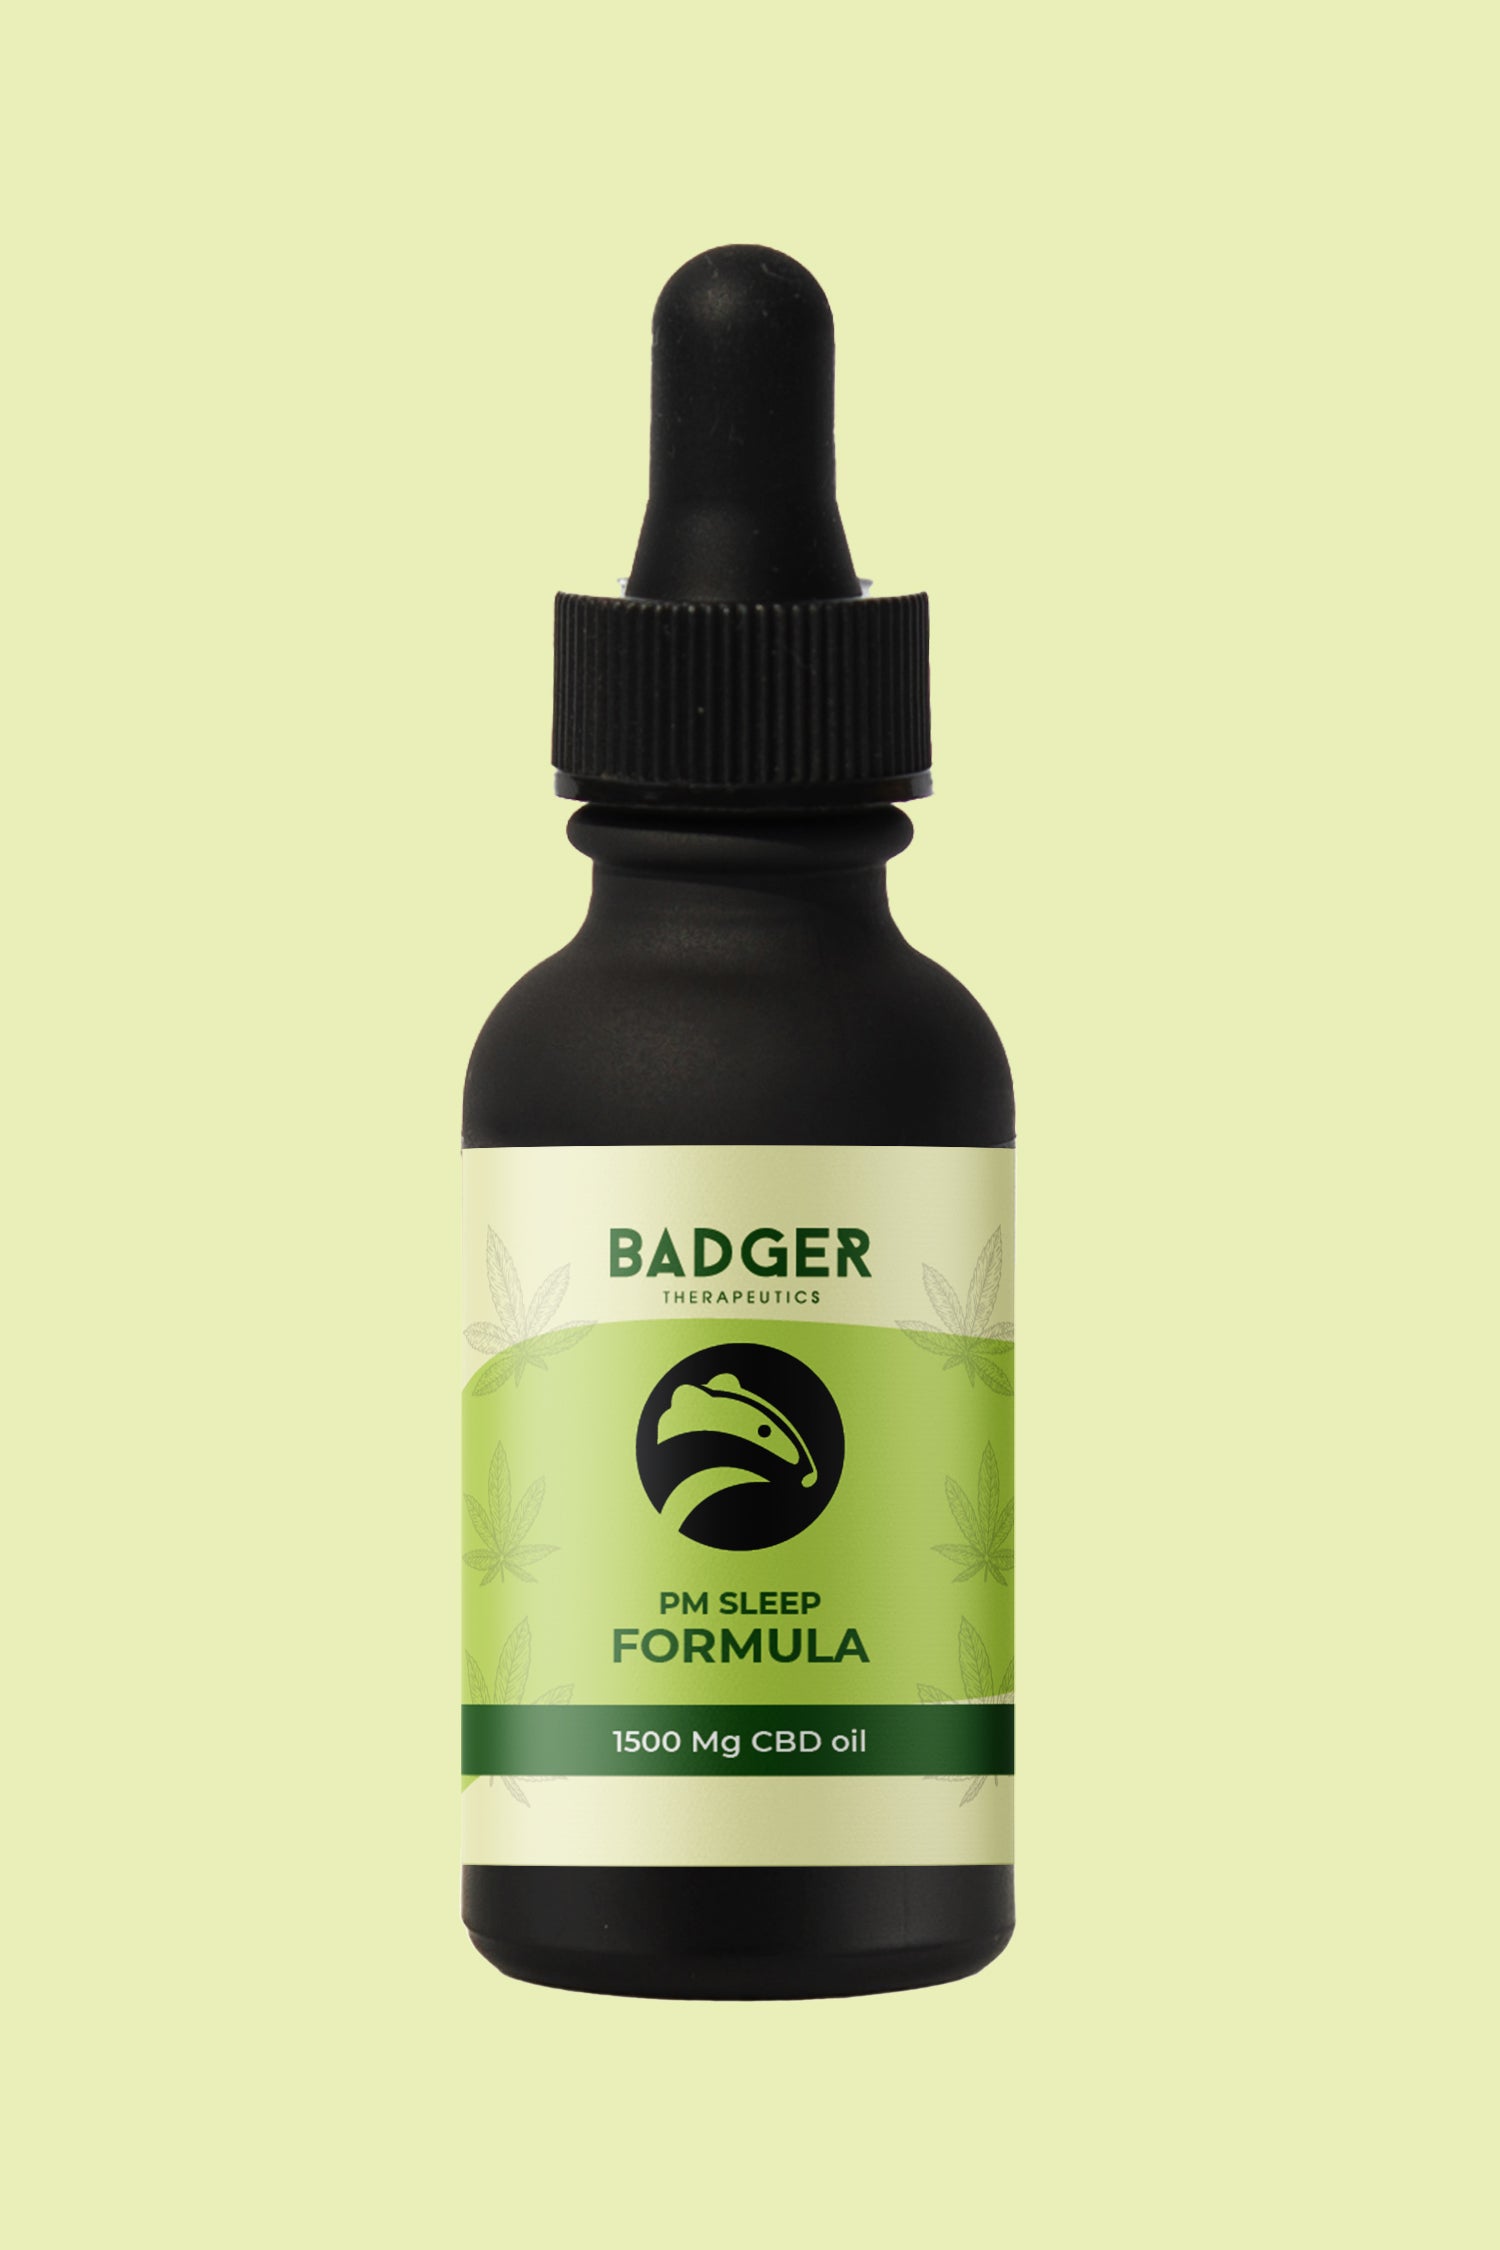 Badger Therapeutics PM Sleep Formula CBD Oil with 750mg CBD